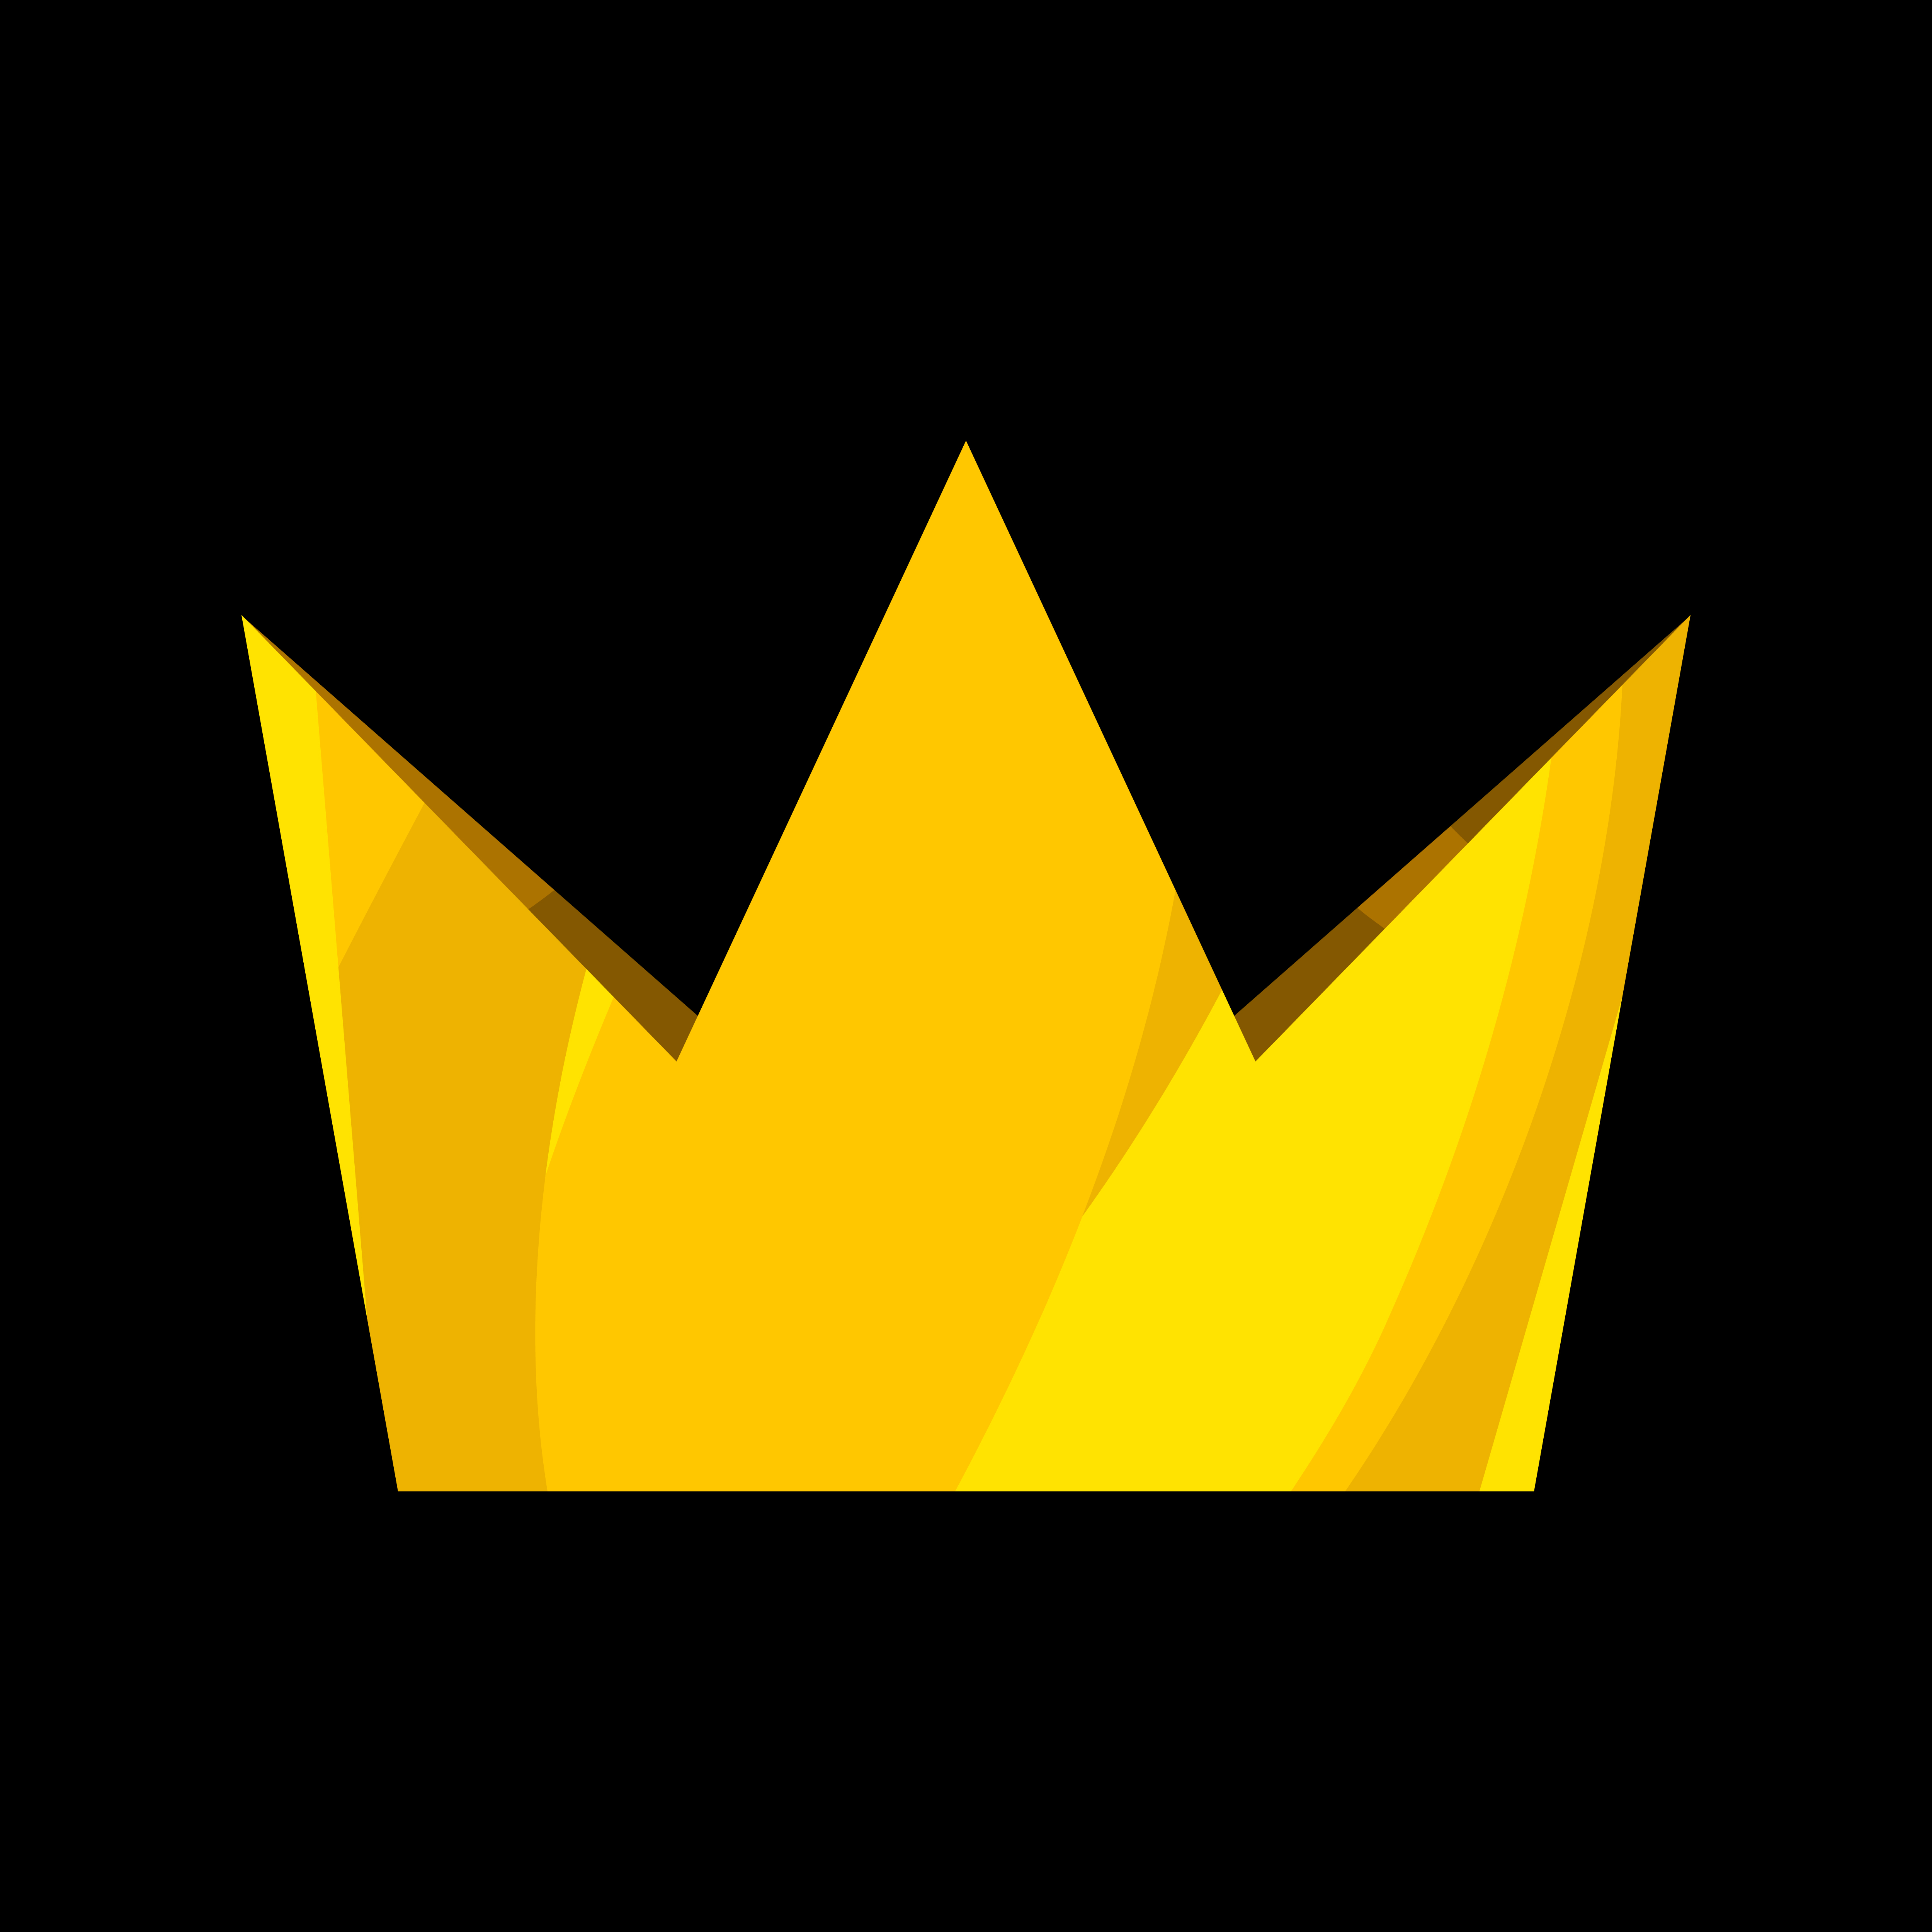 Download Royal crown vector icon - Download Free Vectors, Clipart ...